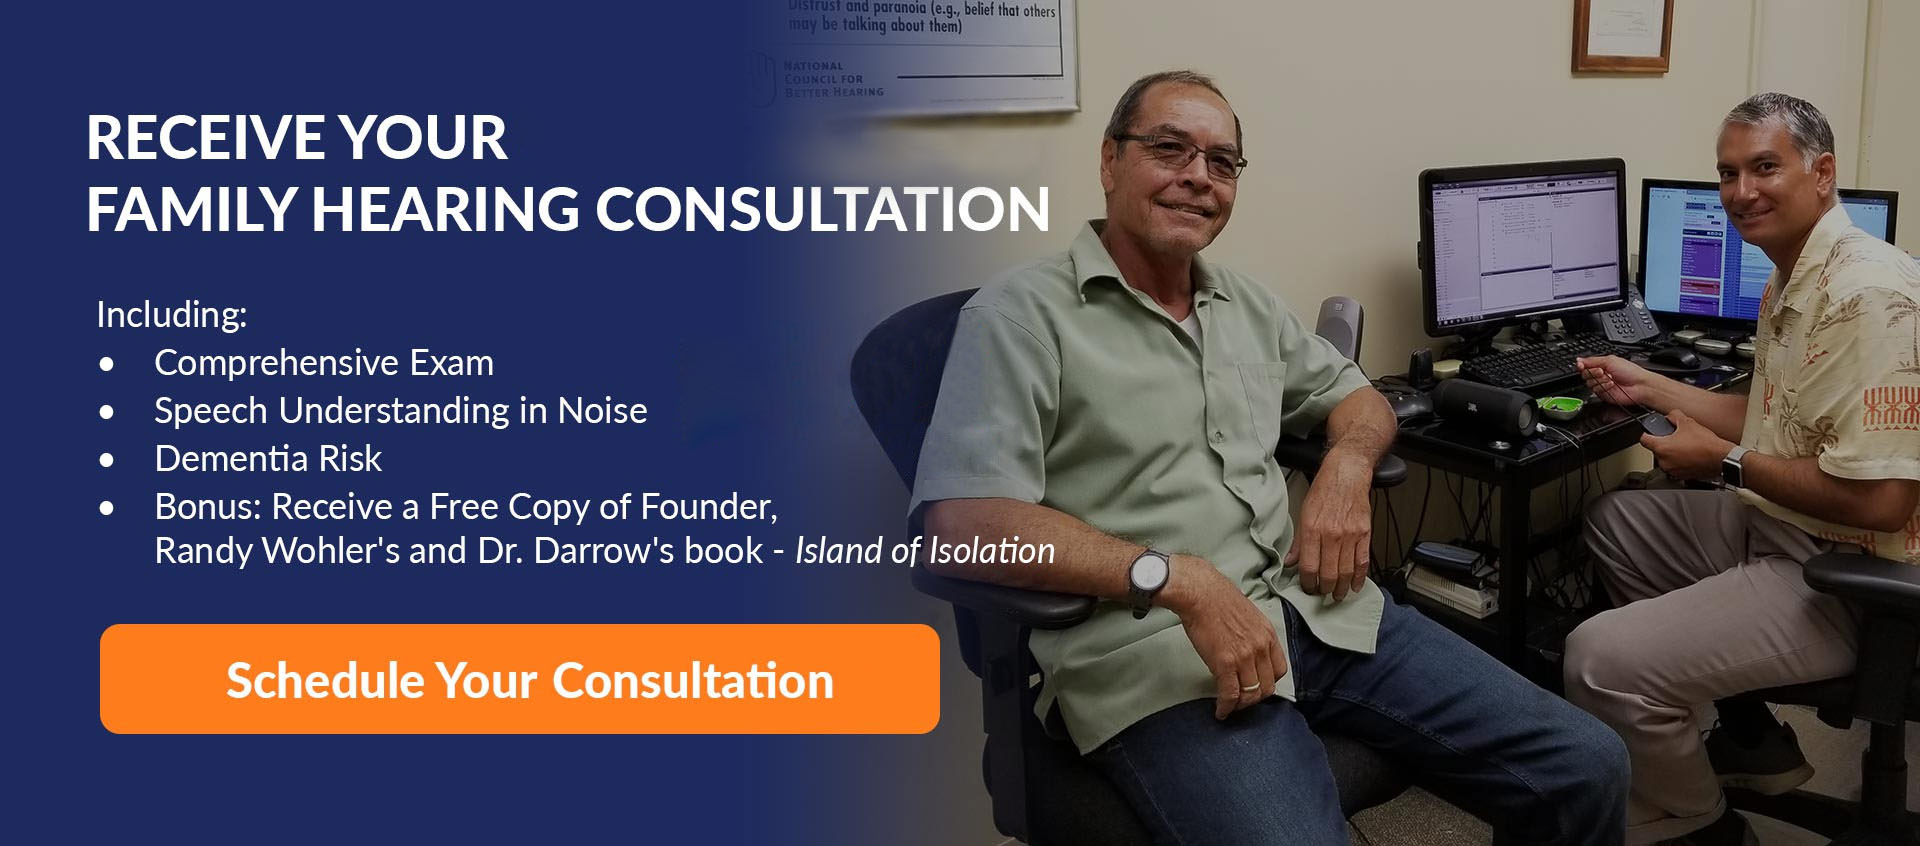 hearing consultation maui hawaii